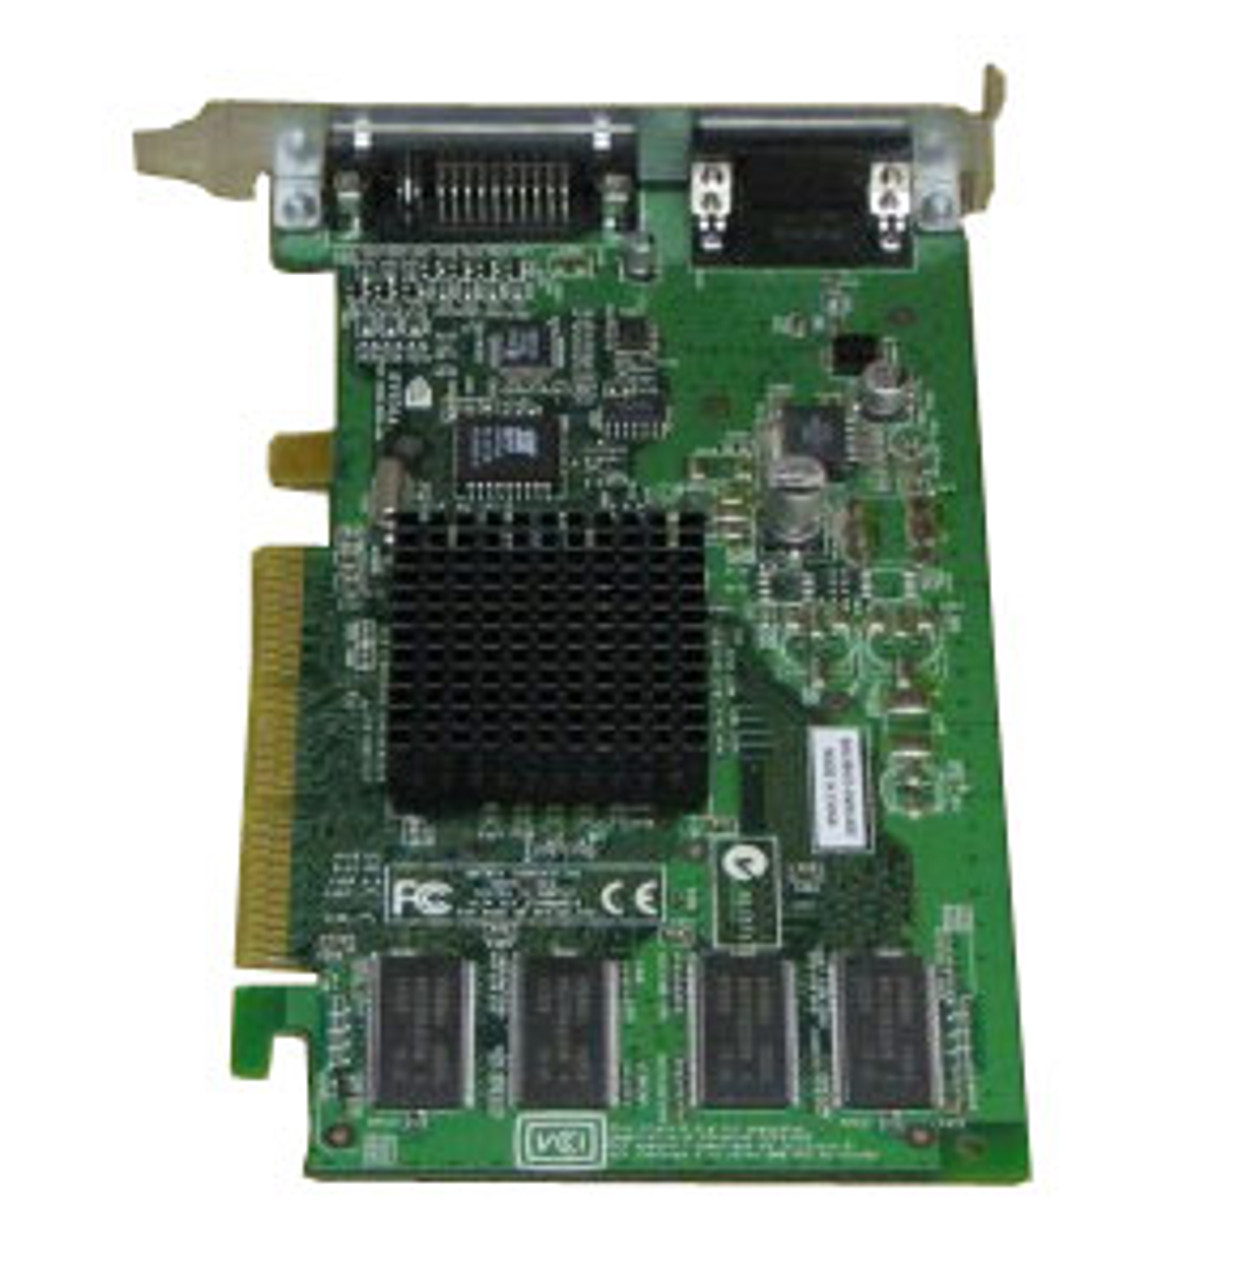 630-3674 - Apple Power Mac G4 Twinview GeForce2 64MB (adc/vga) (agp) Video Graphics Card (Refurbished)